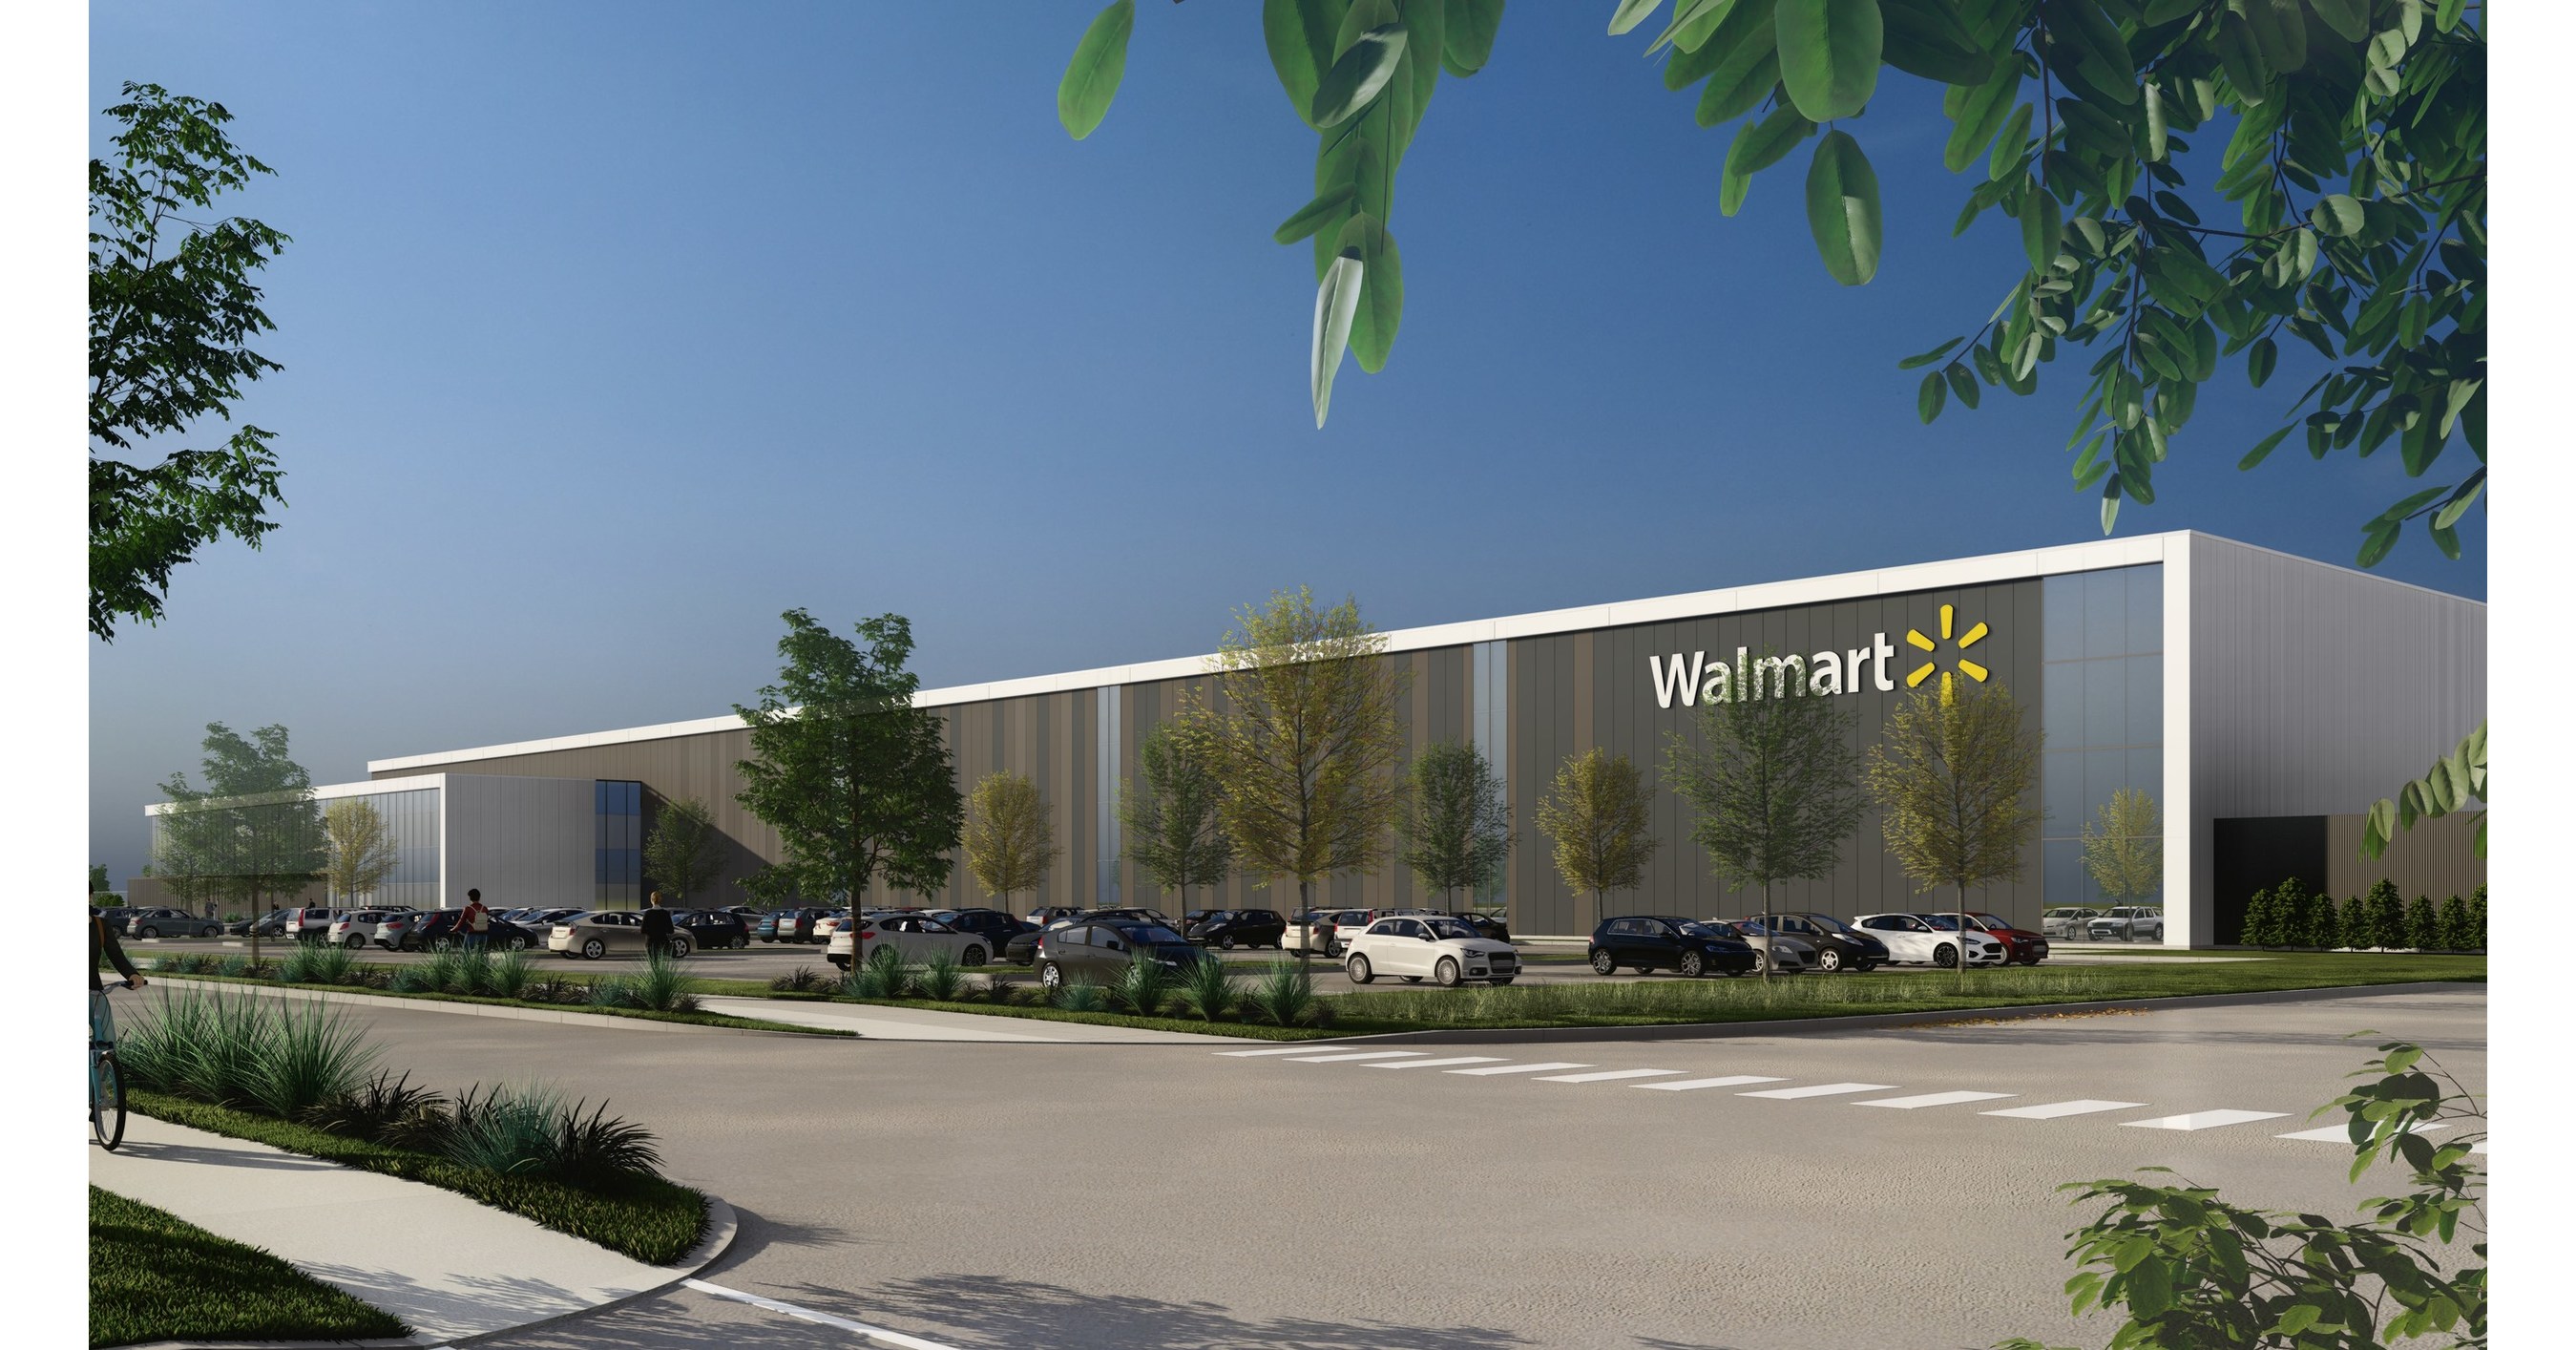 Walmart Canada supports e-commerce with smart facility